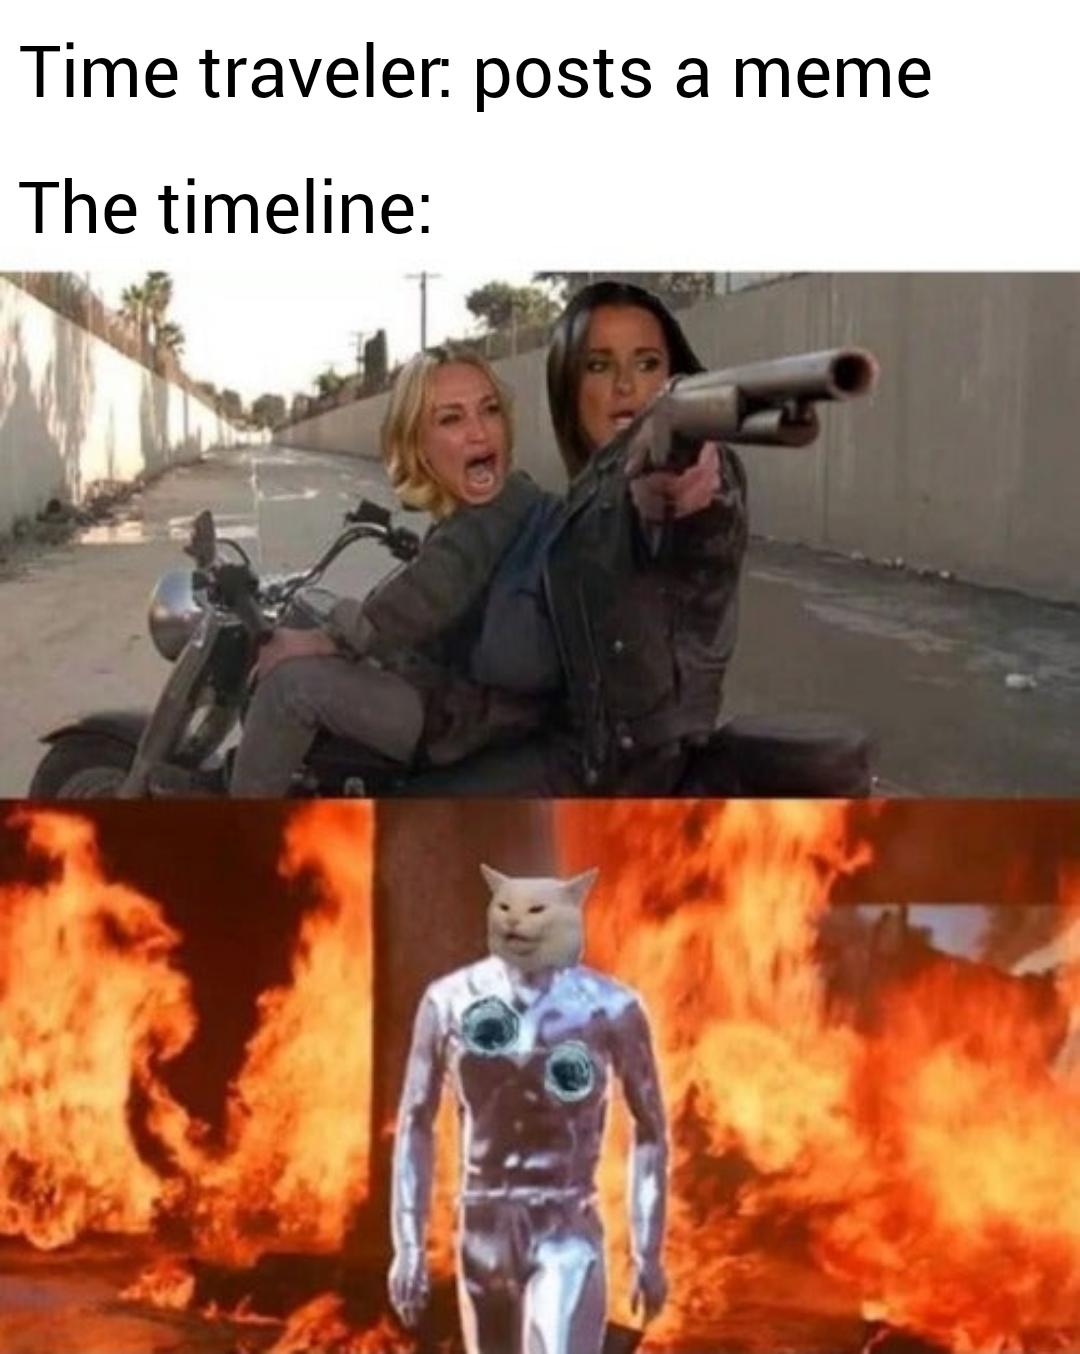 terminator 2 - Time traveler posts a meme The timeline